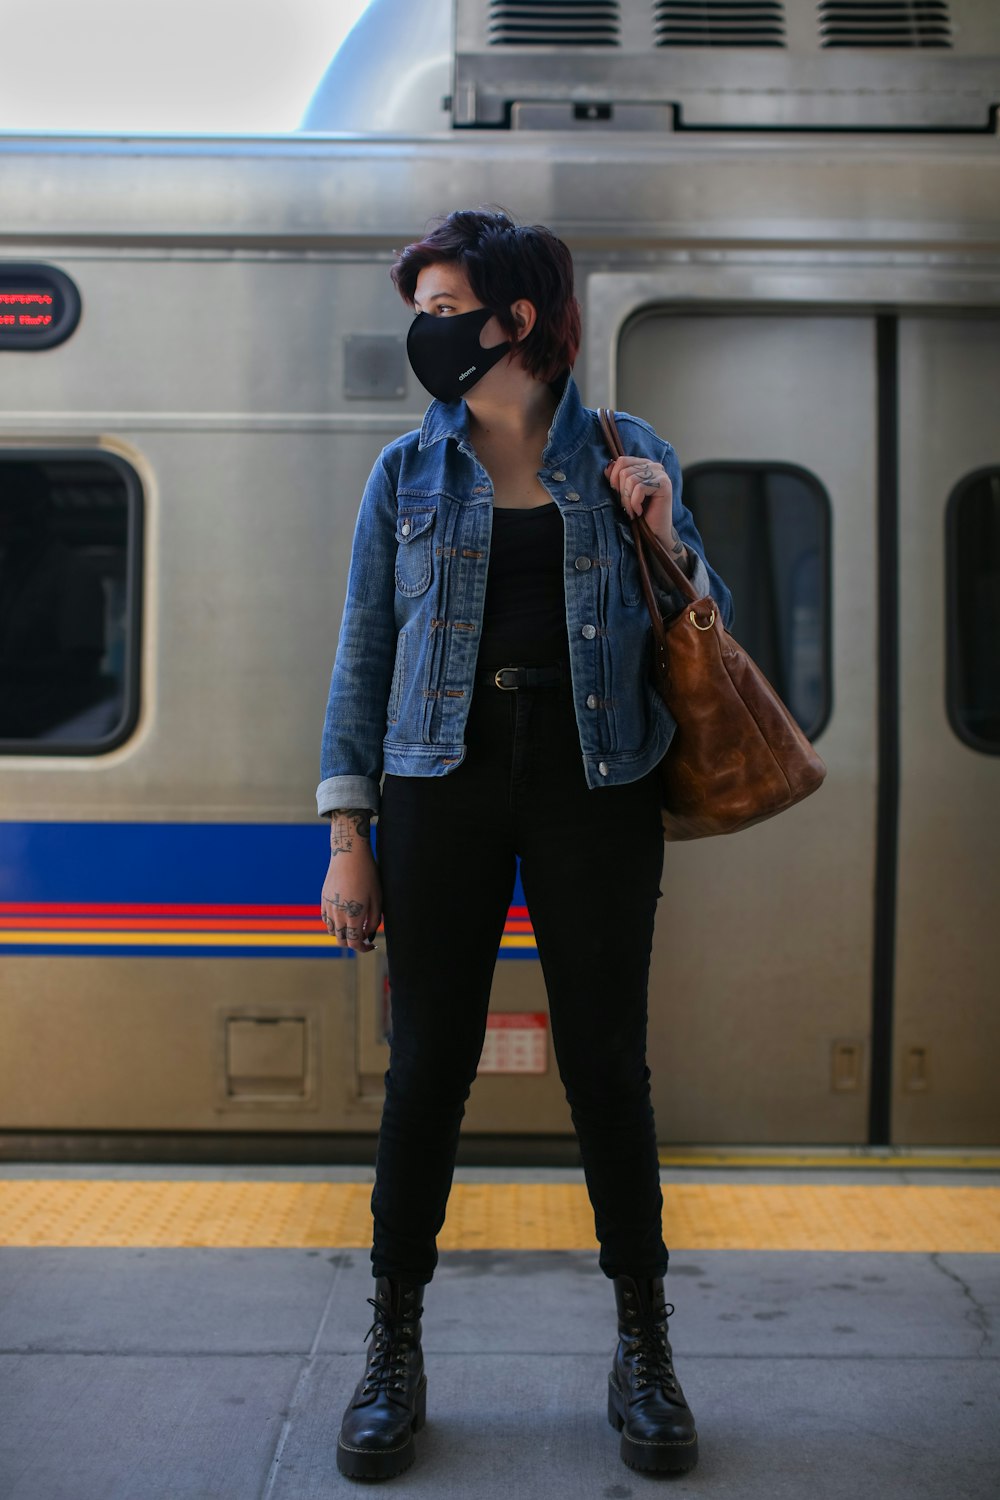 woman in blue denim jacket and black pants standing beside train